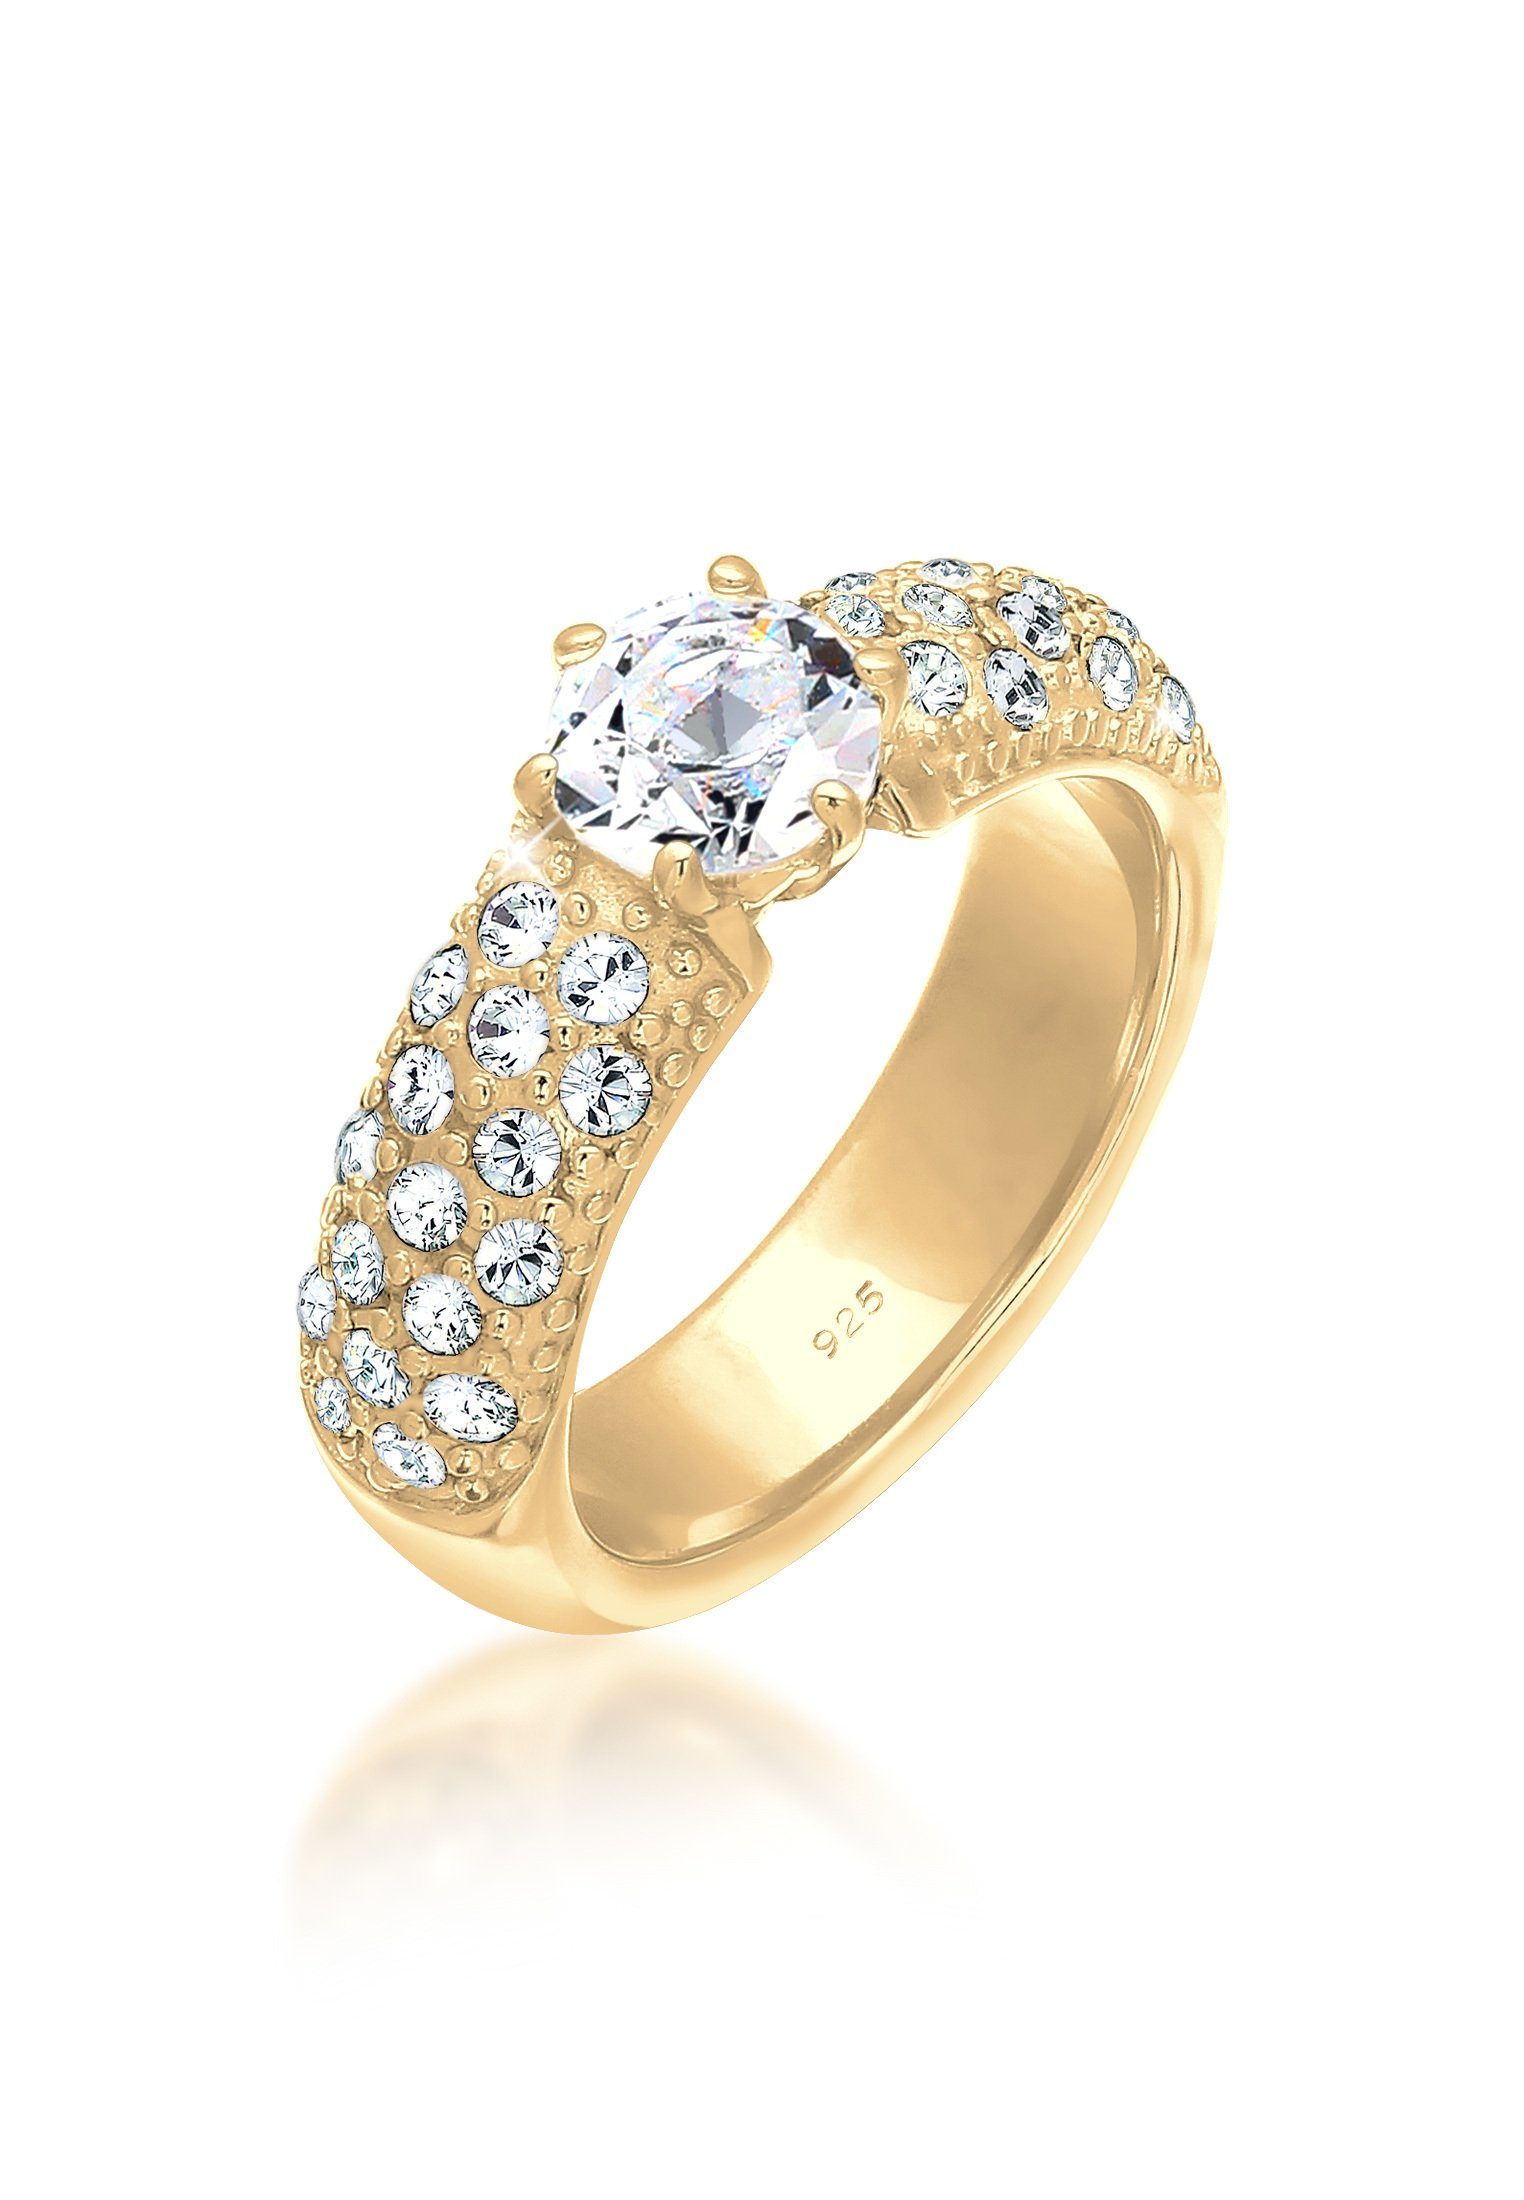 Silber Kristalle Premium Elli 925 Gold Verlobungsring Verlobungsring